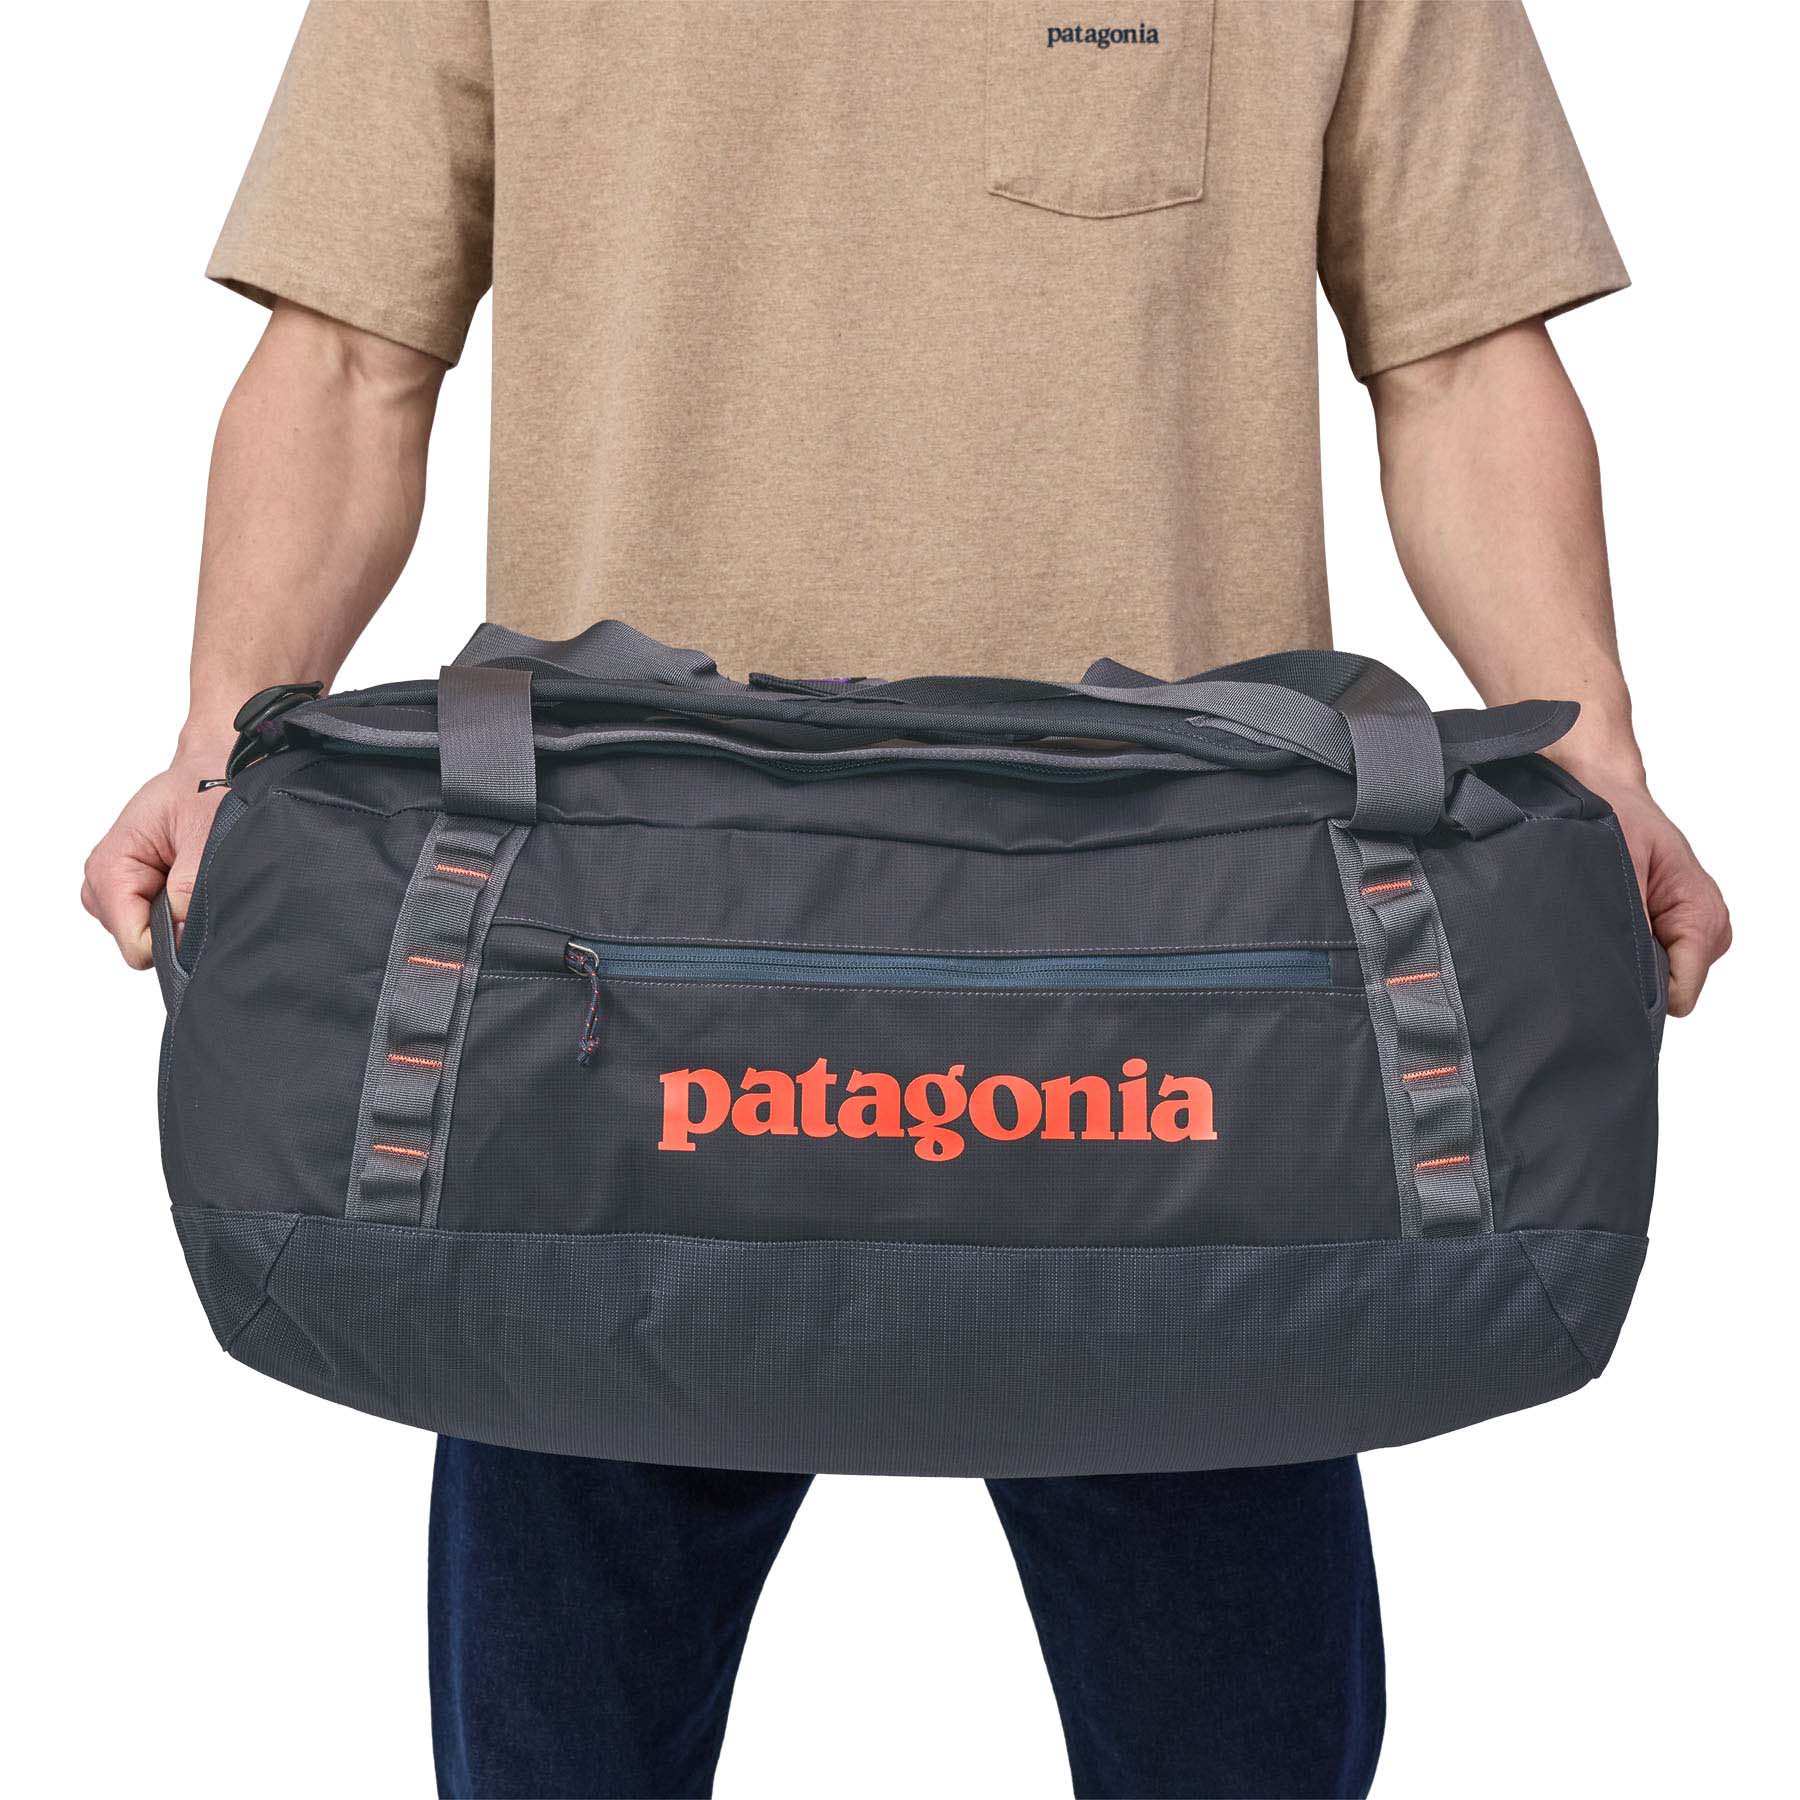 Patagonia Black Hole 55 Backpack & Duffel Bag